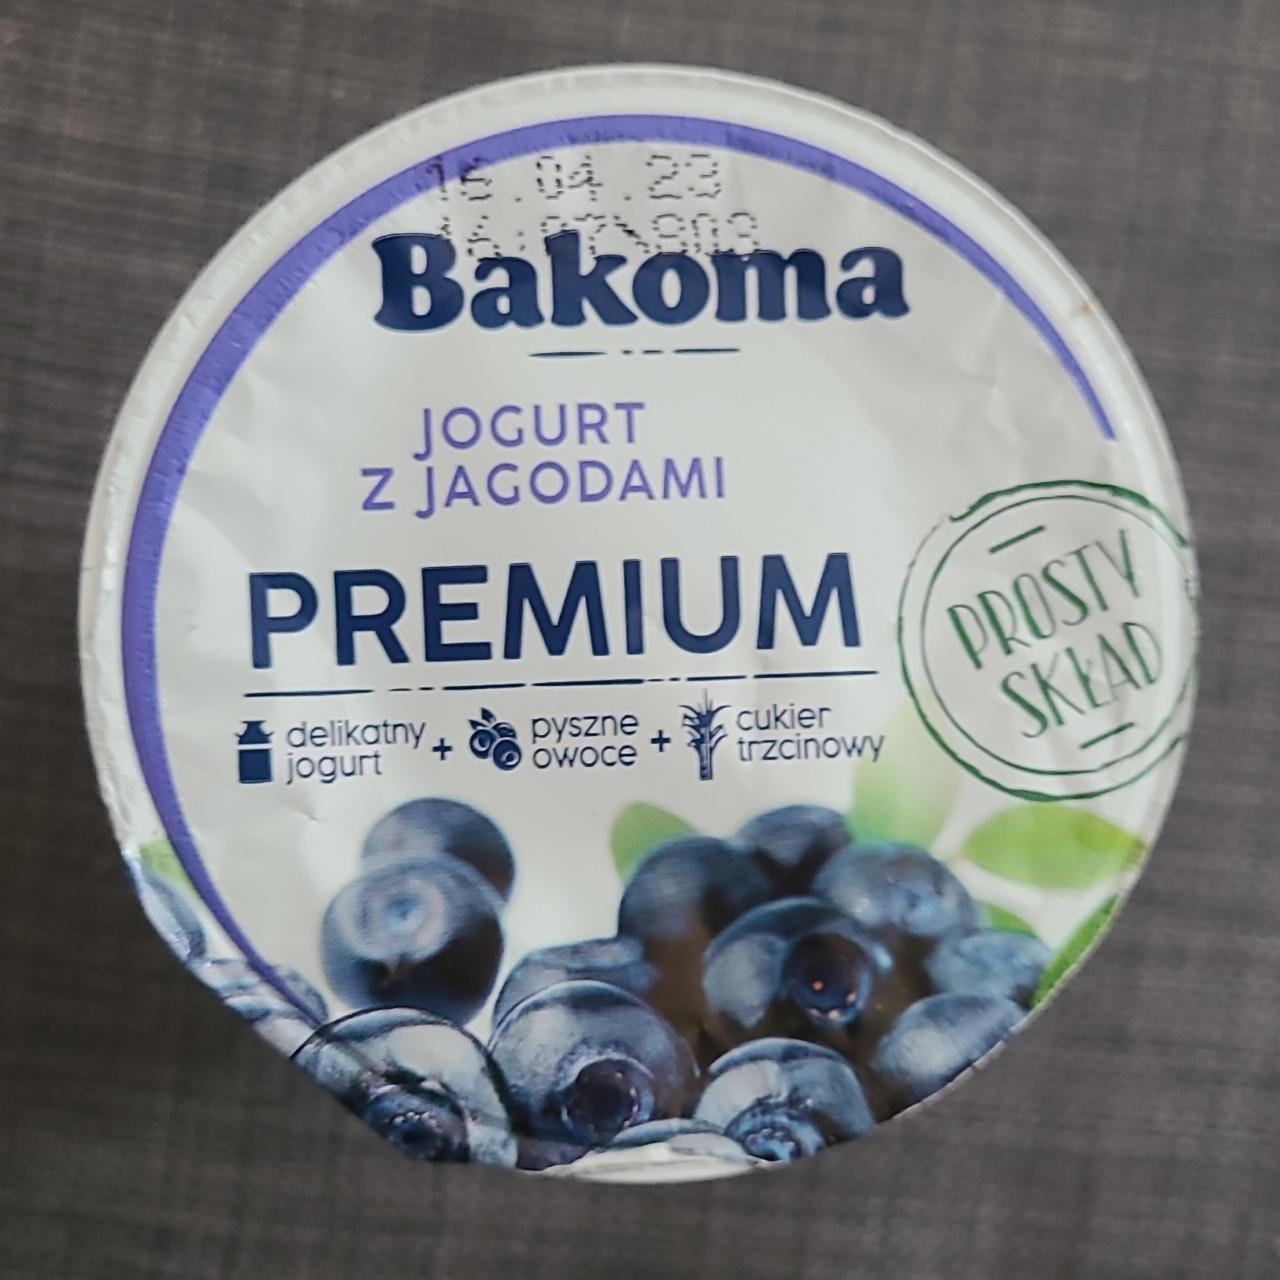 Zdjęcia - Bakoma Premium Jogurt z jagodami 140 g